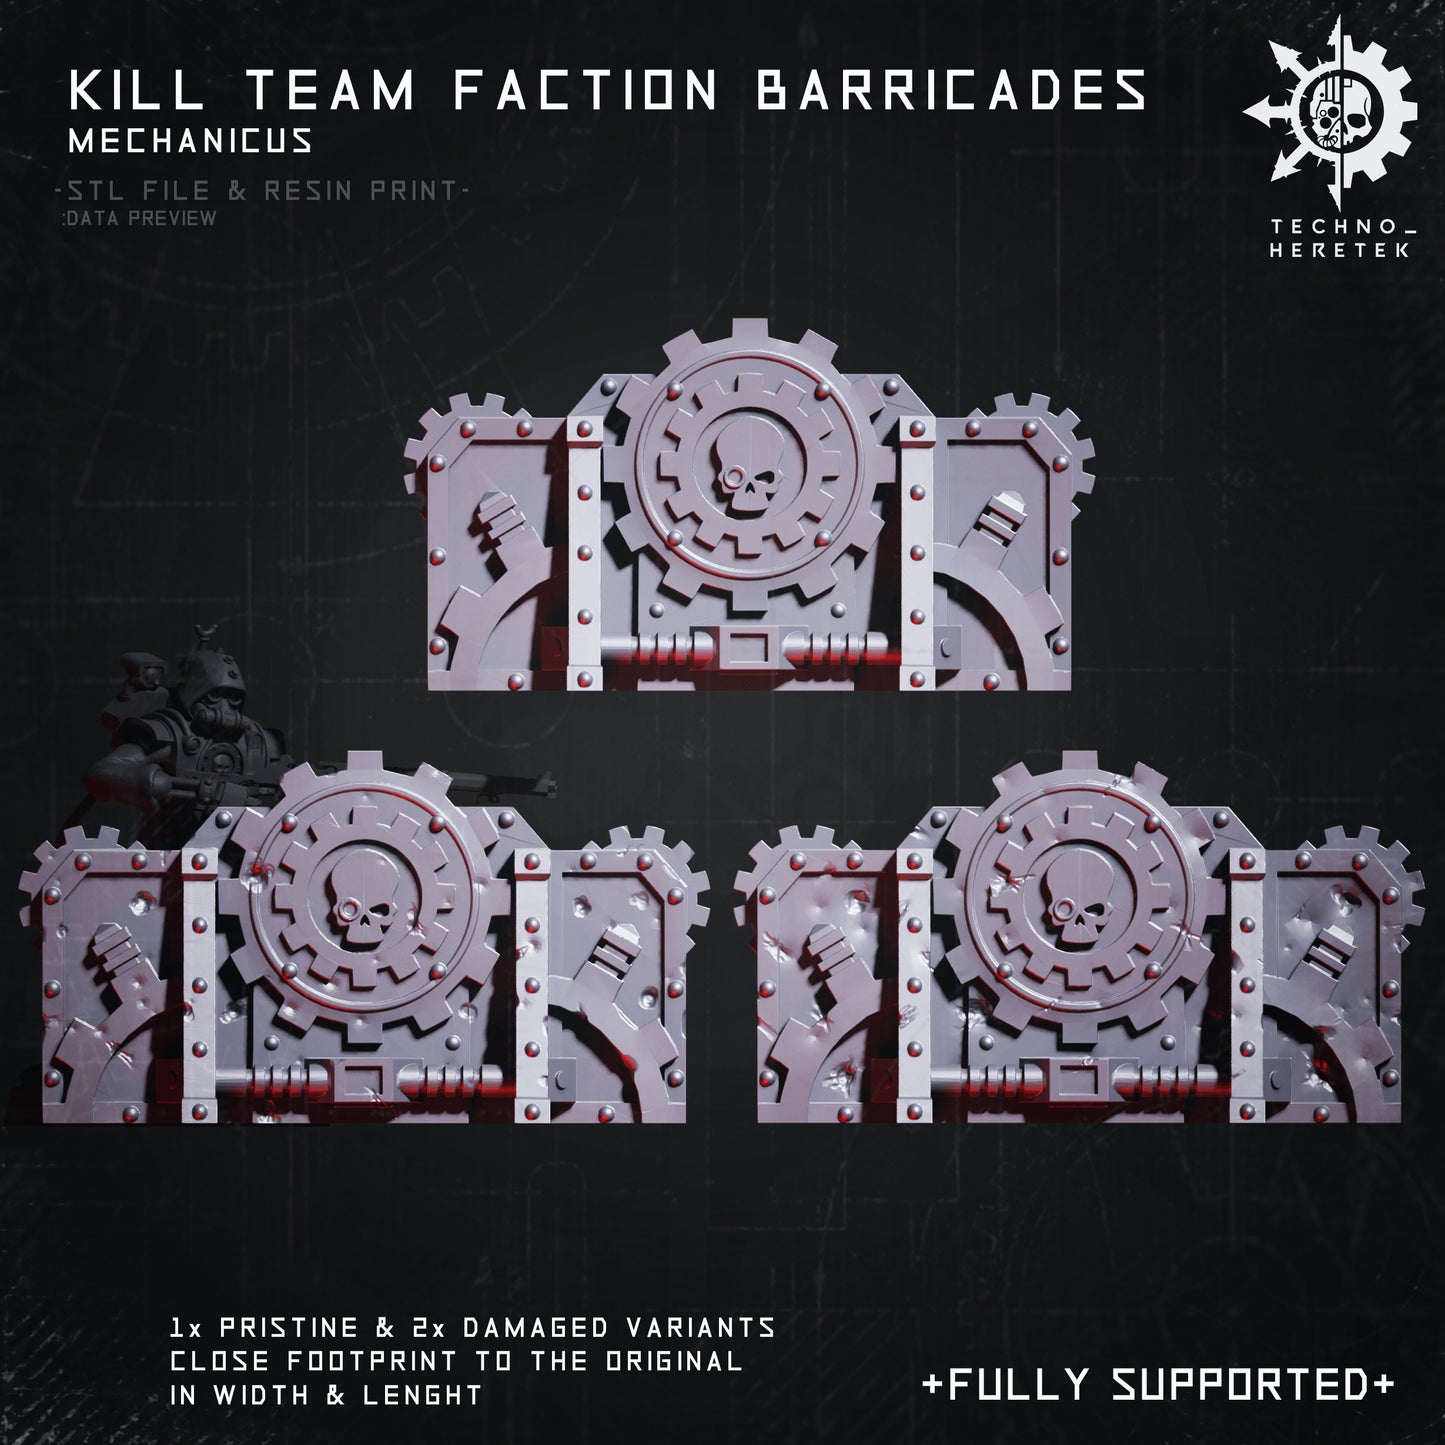 Mechanicus Faction Barricade for Kill team - STL File Pack